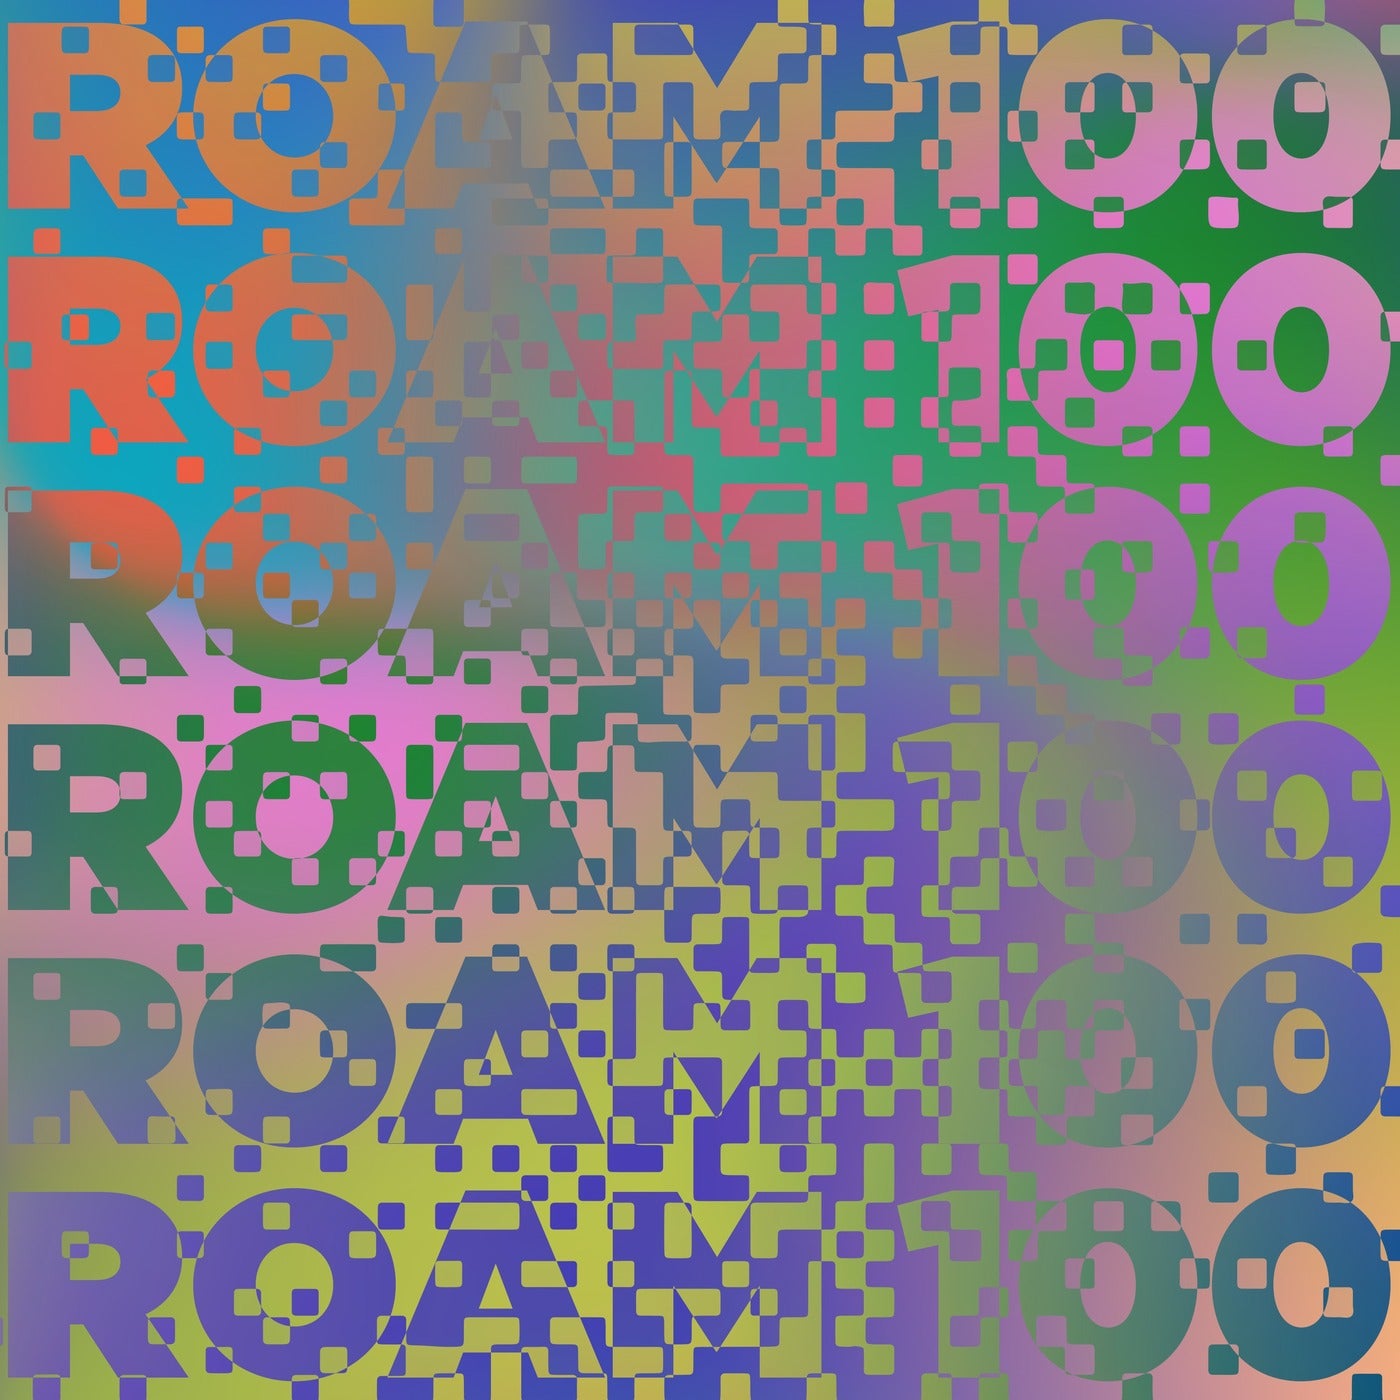 image cover: VA - The Roam 100 Compilation / ROM100